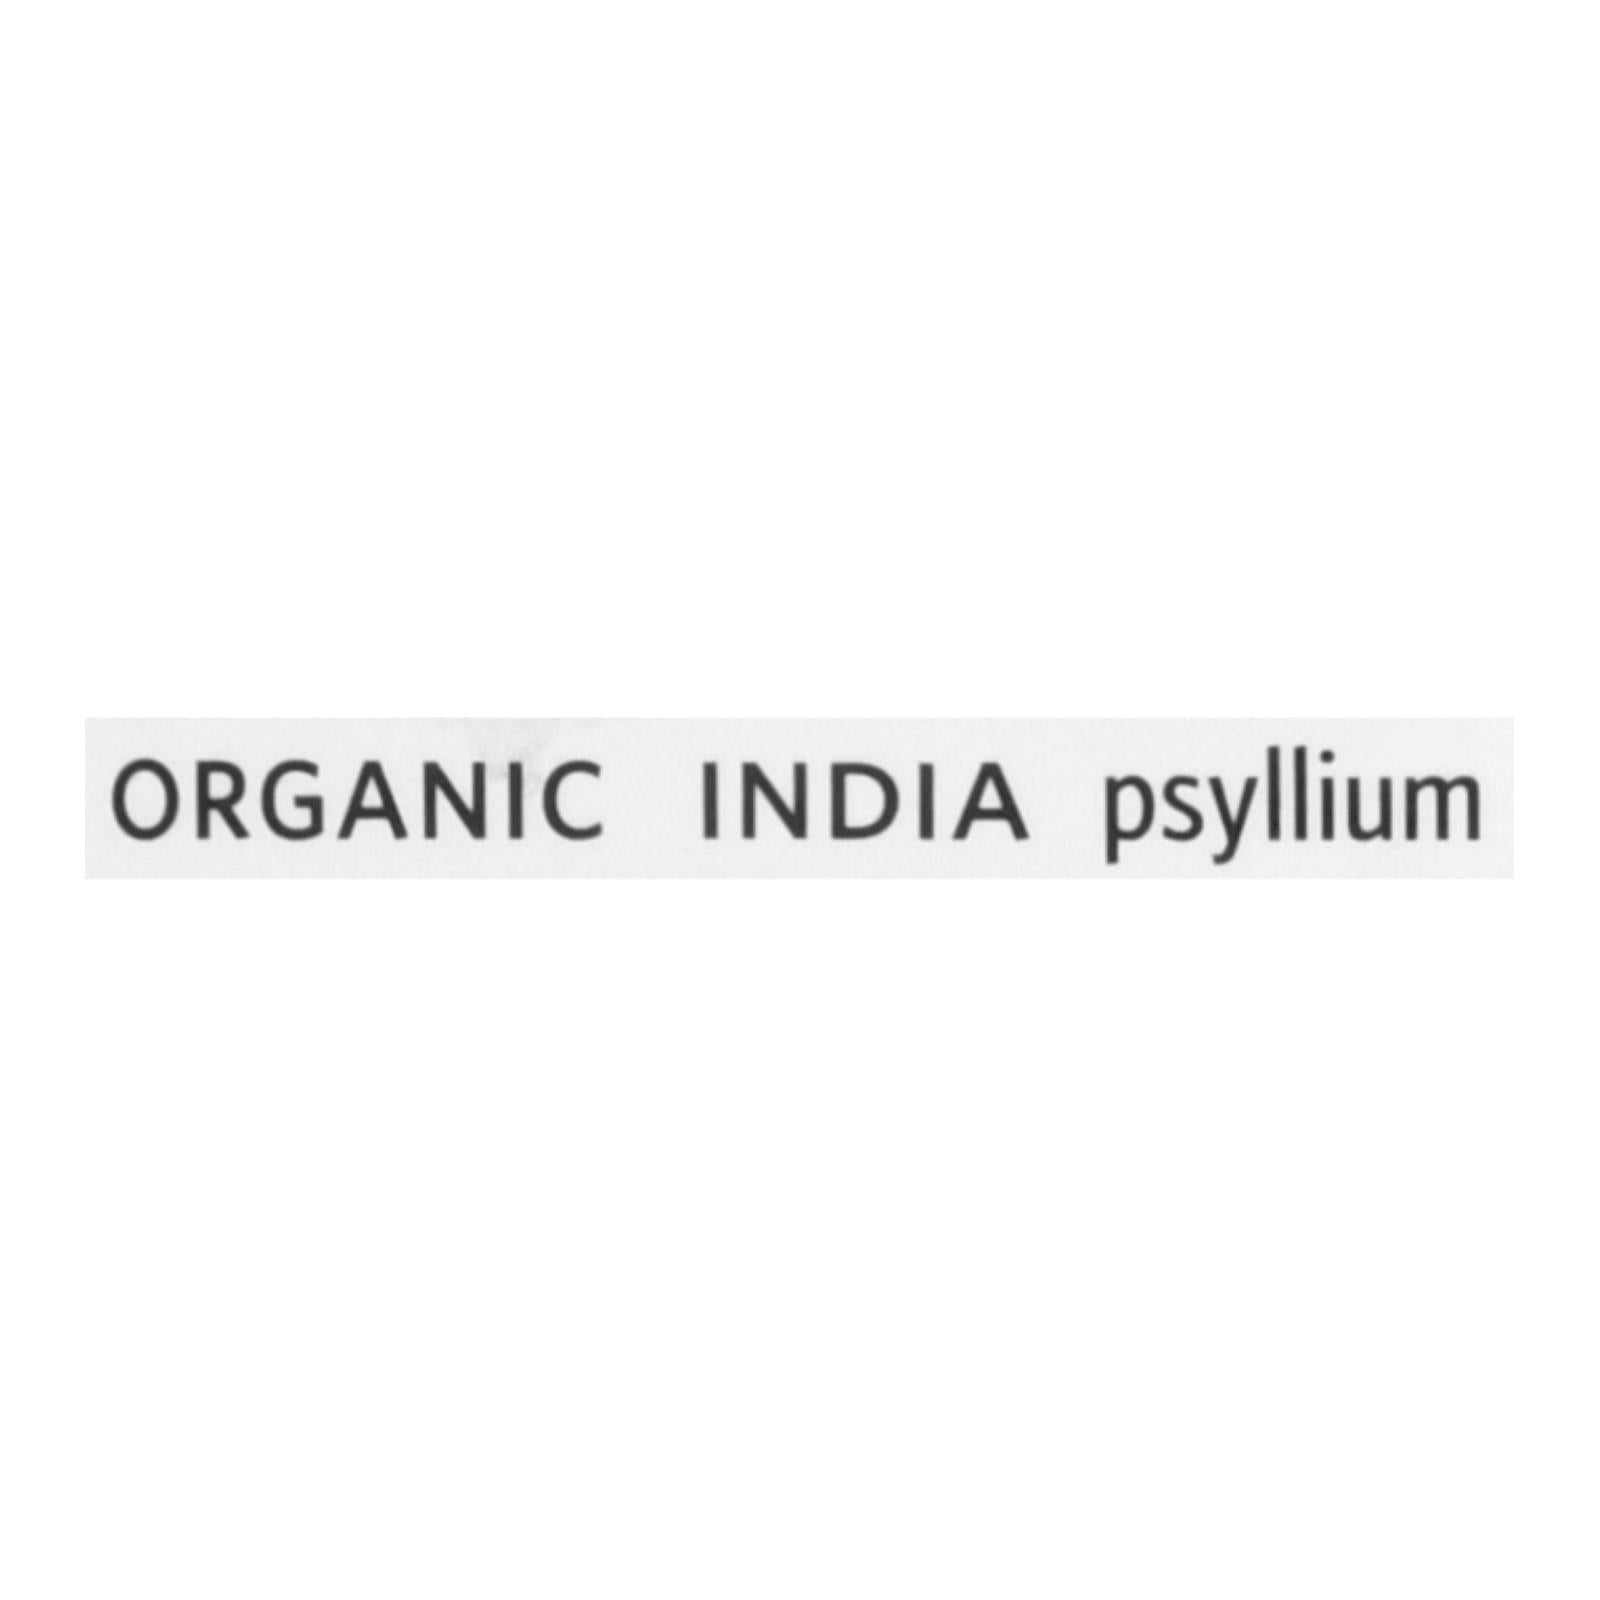 Organic India Fiber Harmony Psyllium Whole Husk - 12 Oz